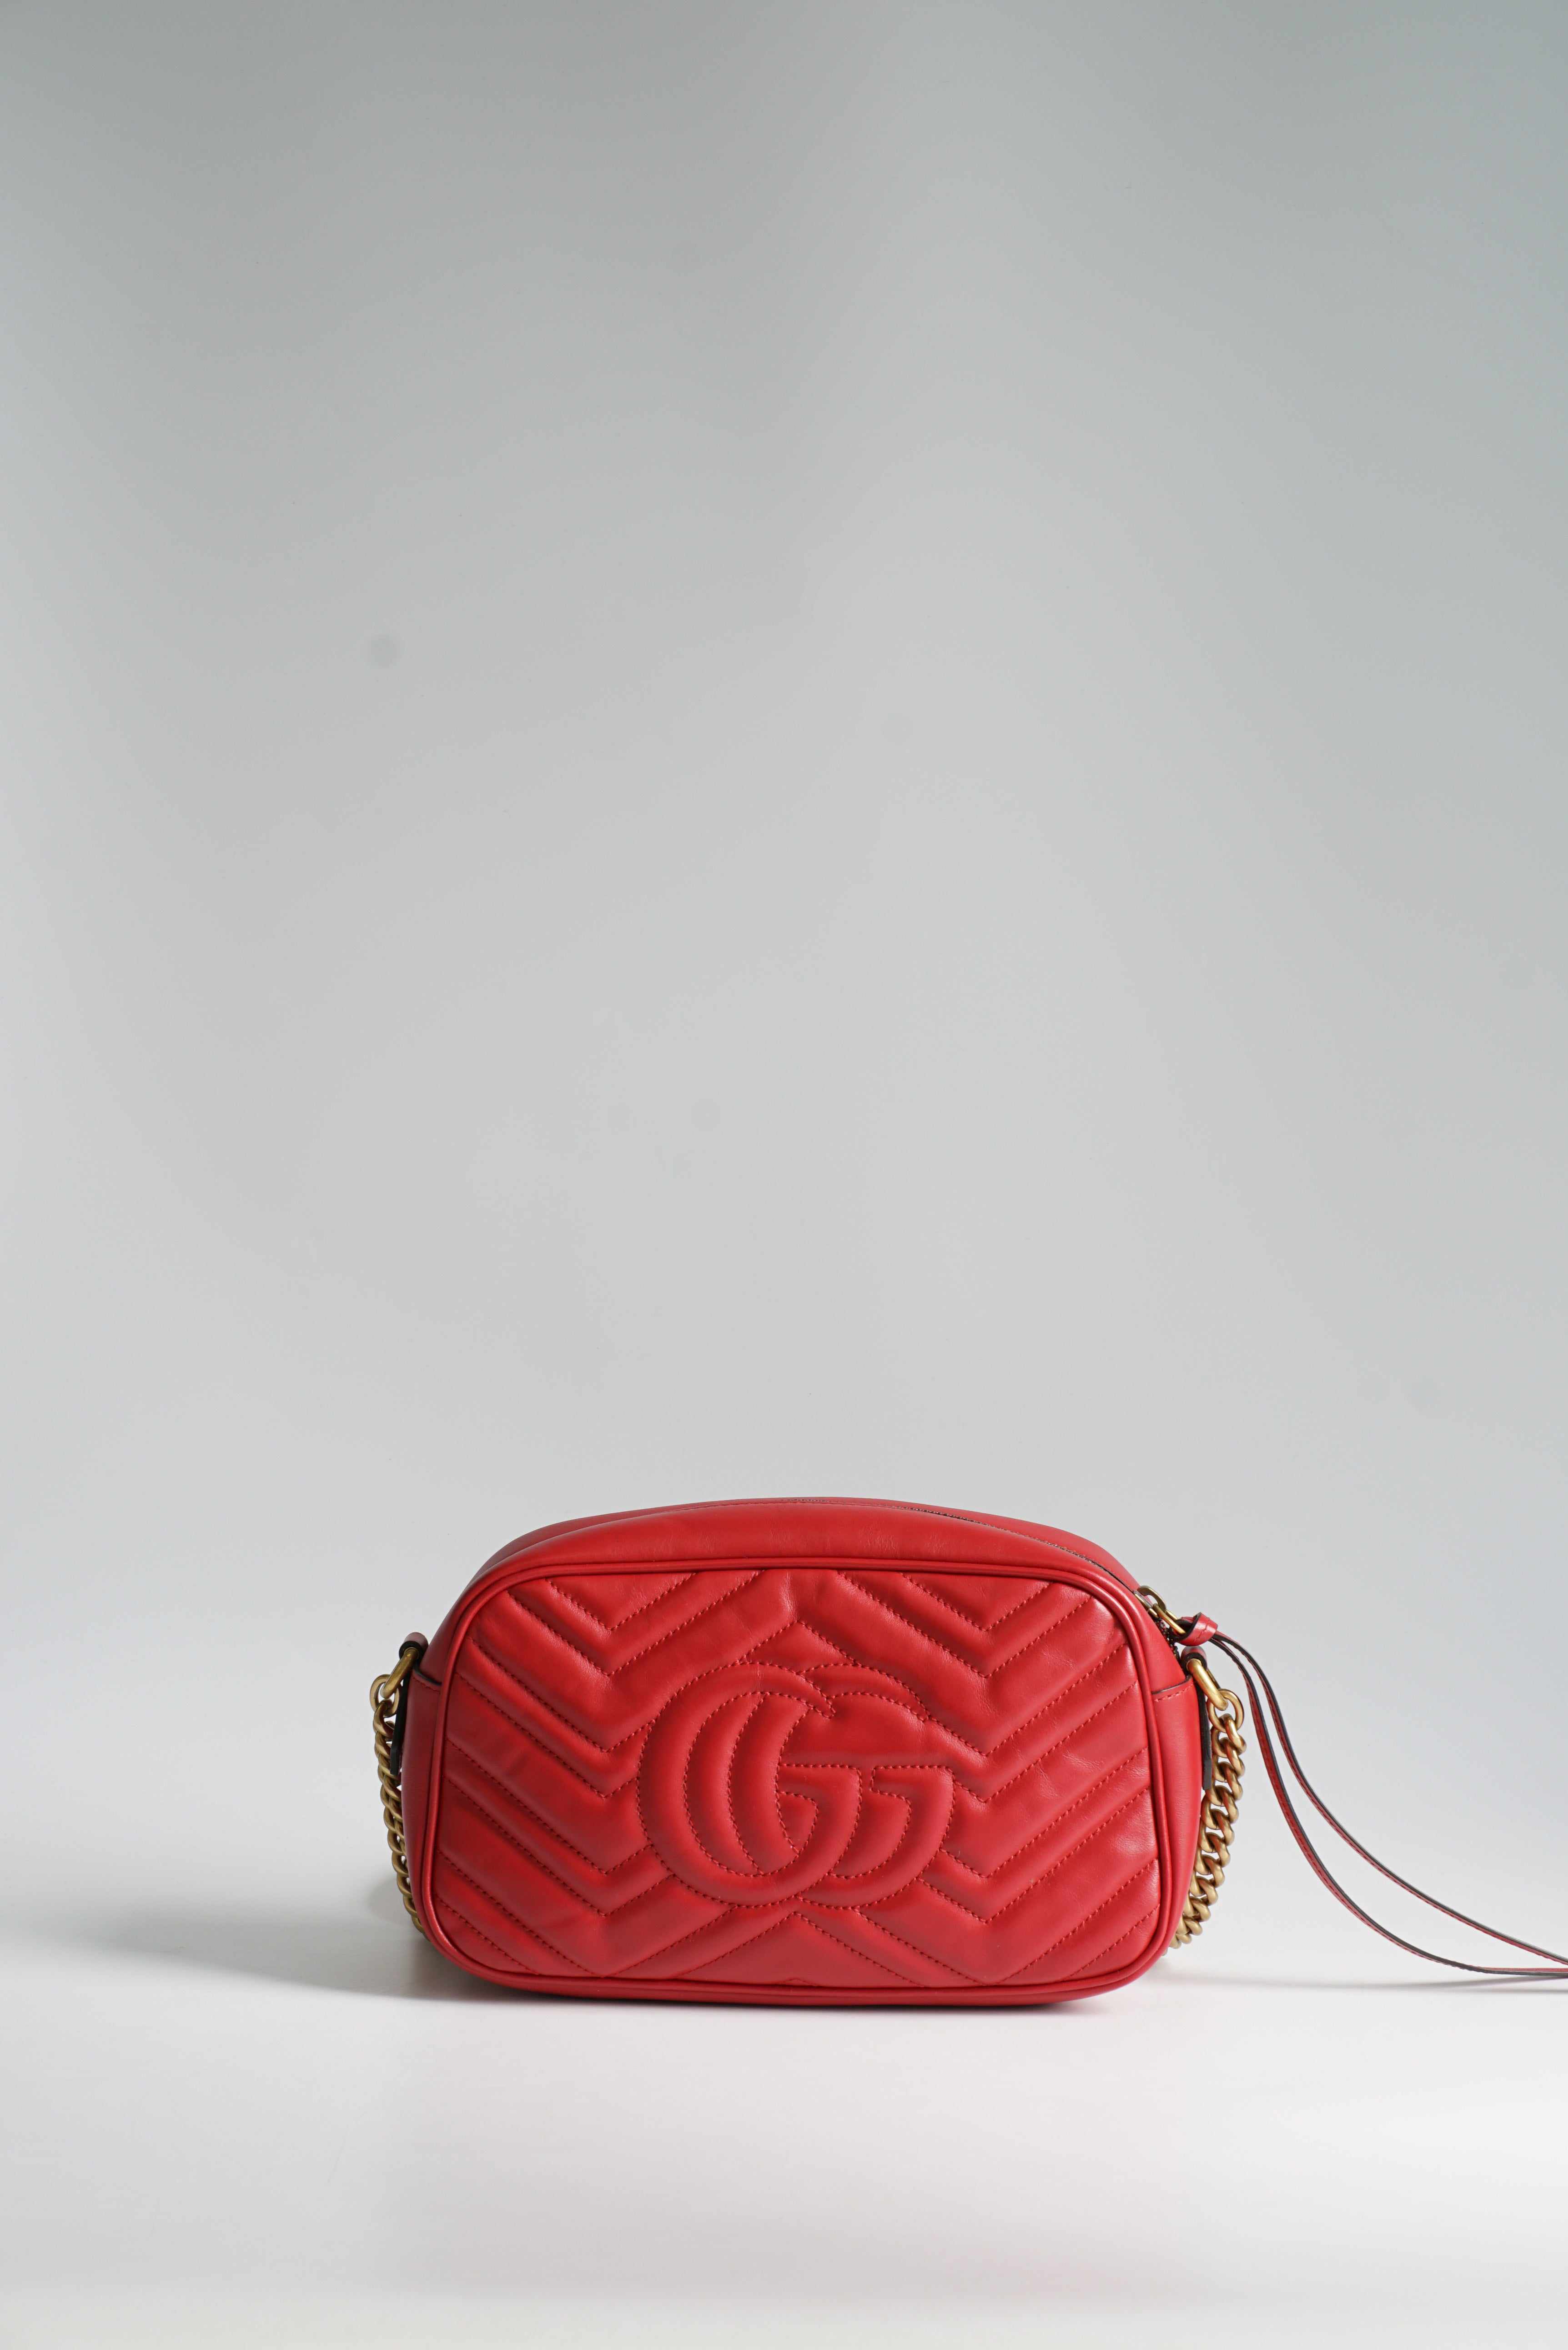 Gucci GG Marmont Matelasse Red Small Camera Bag